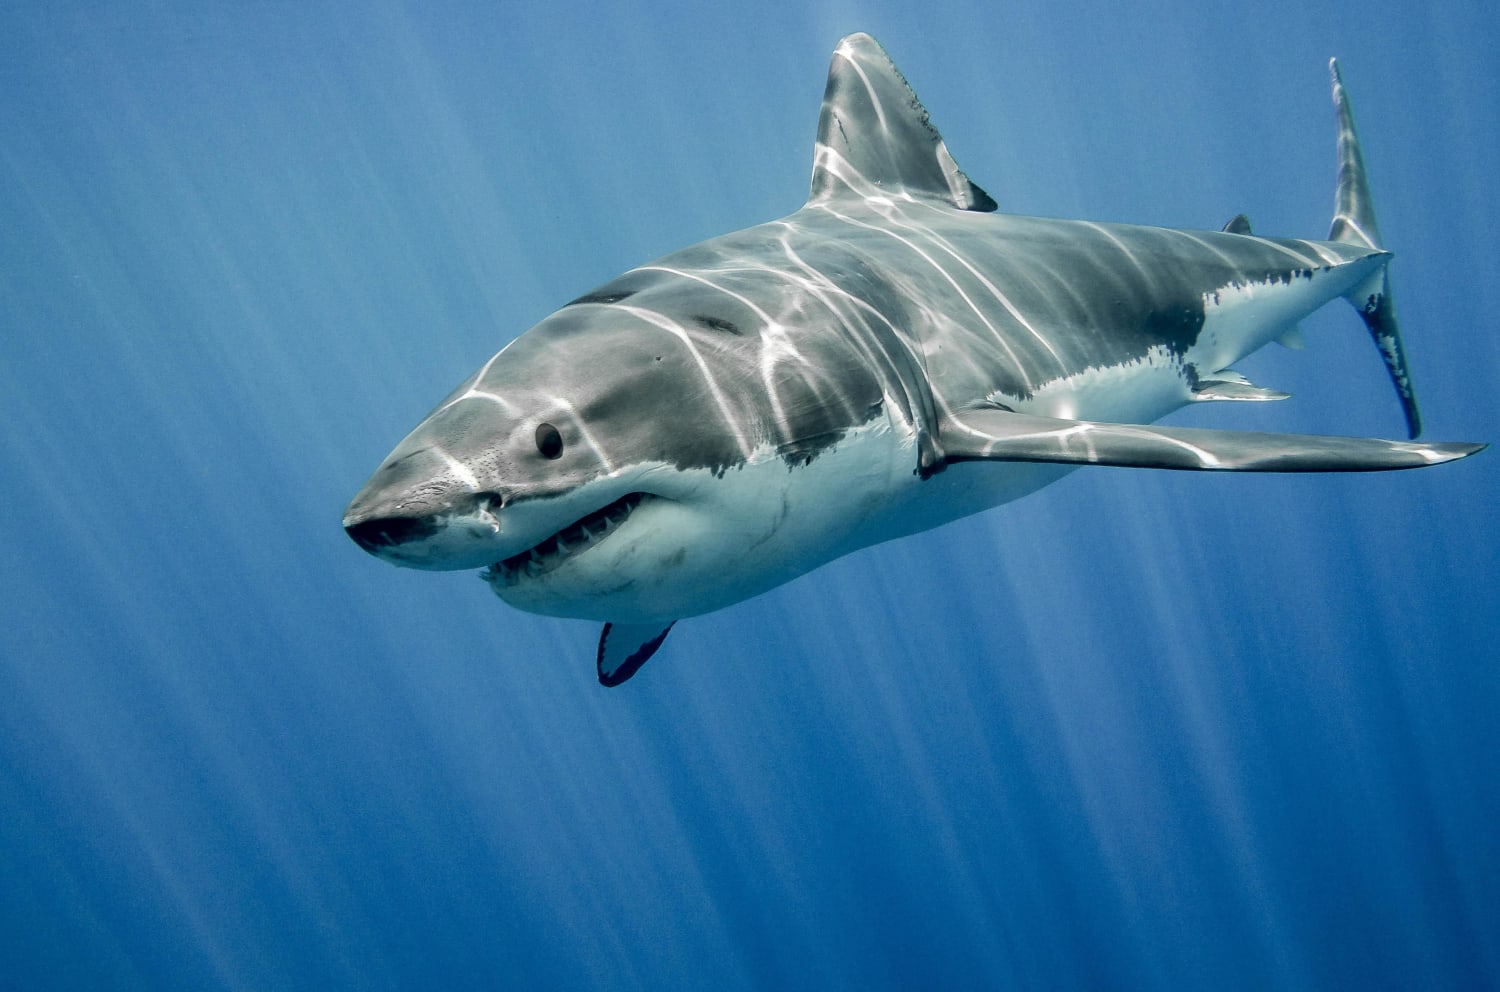 A Great White Shark roaming freely in the open ocean. It’s a beautiful, majestic animal isn’t it?